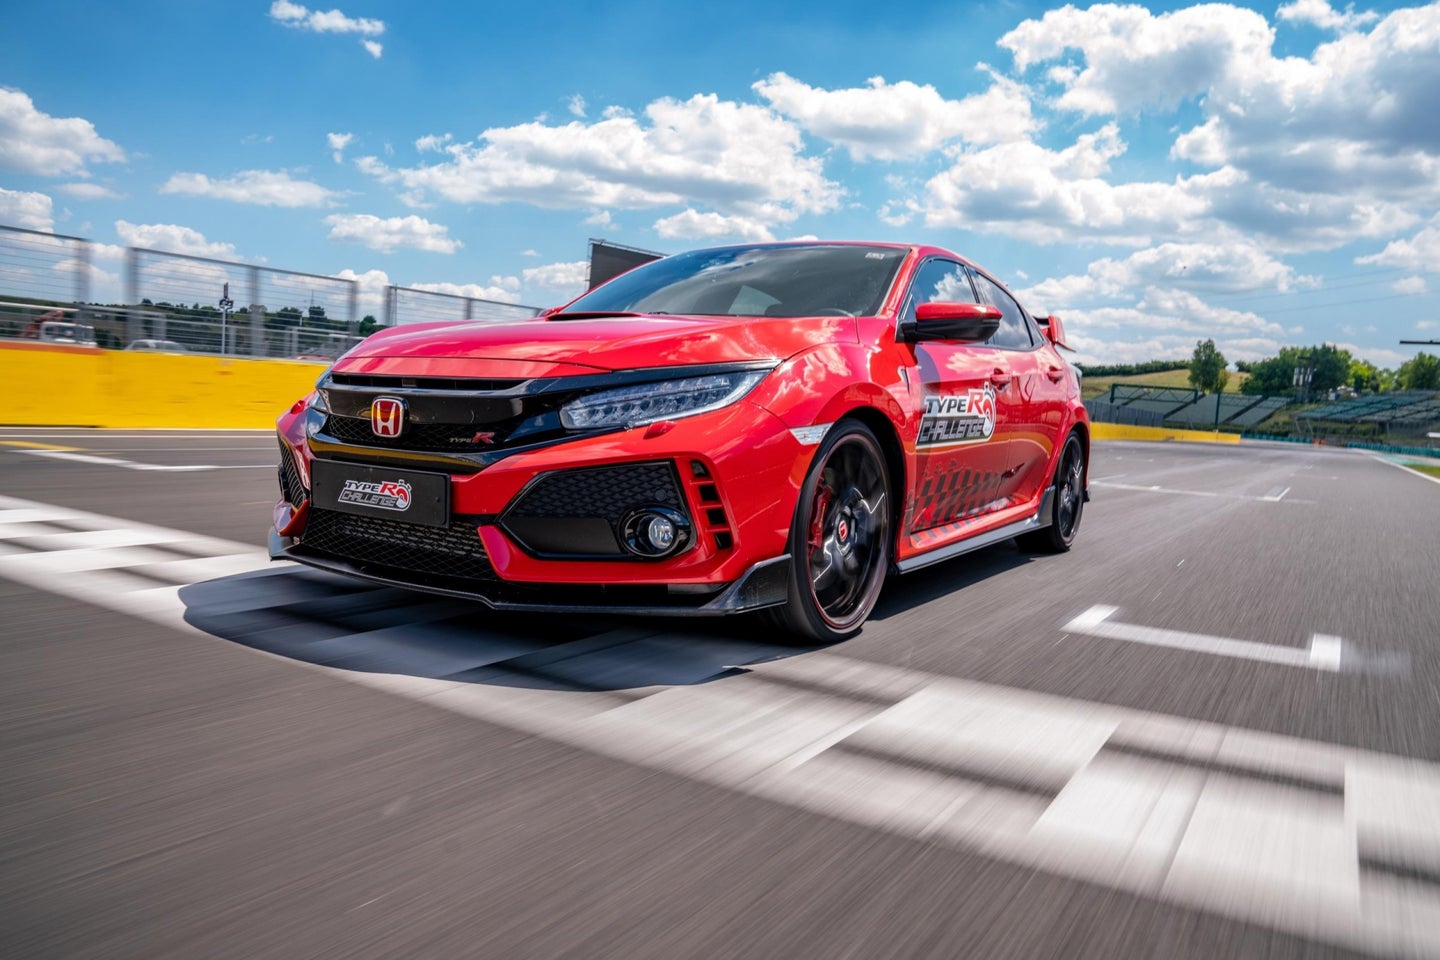 Honda Civic Type R Sets Lap Record for FWD Production Cars At Hungaroring GP Circuit